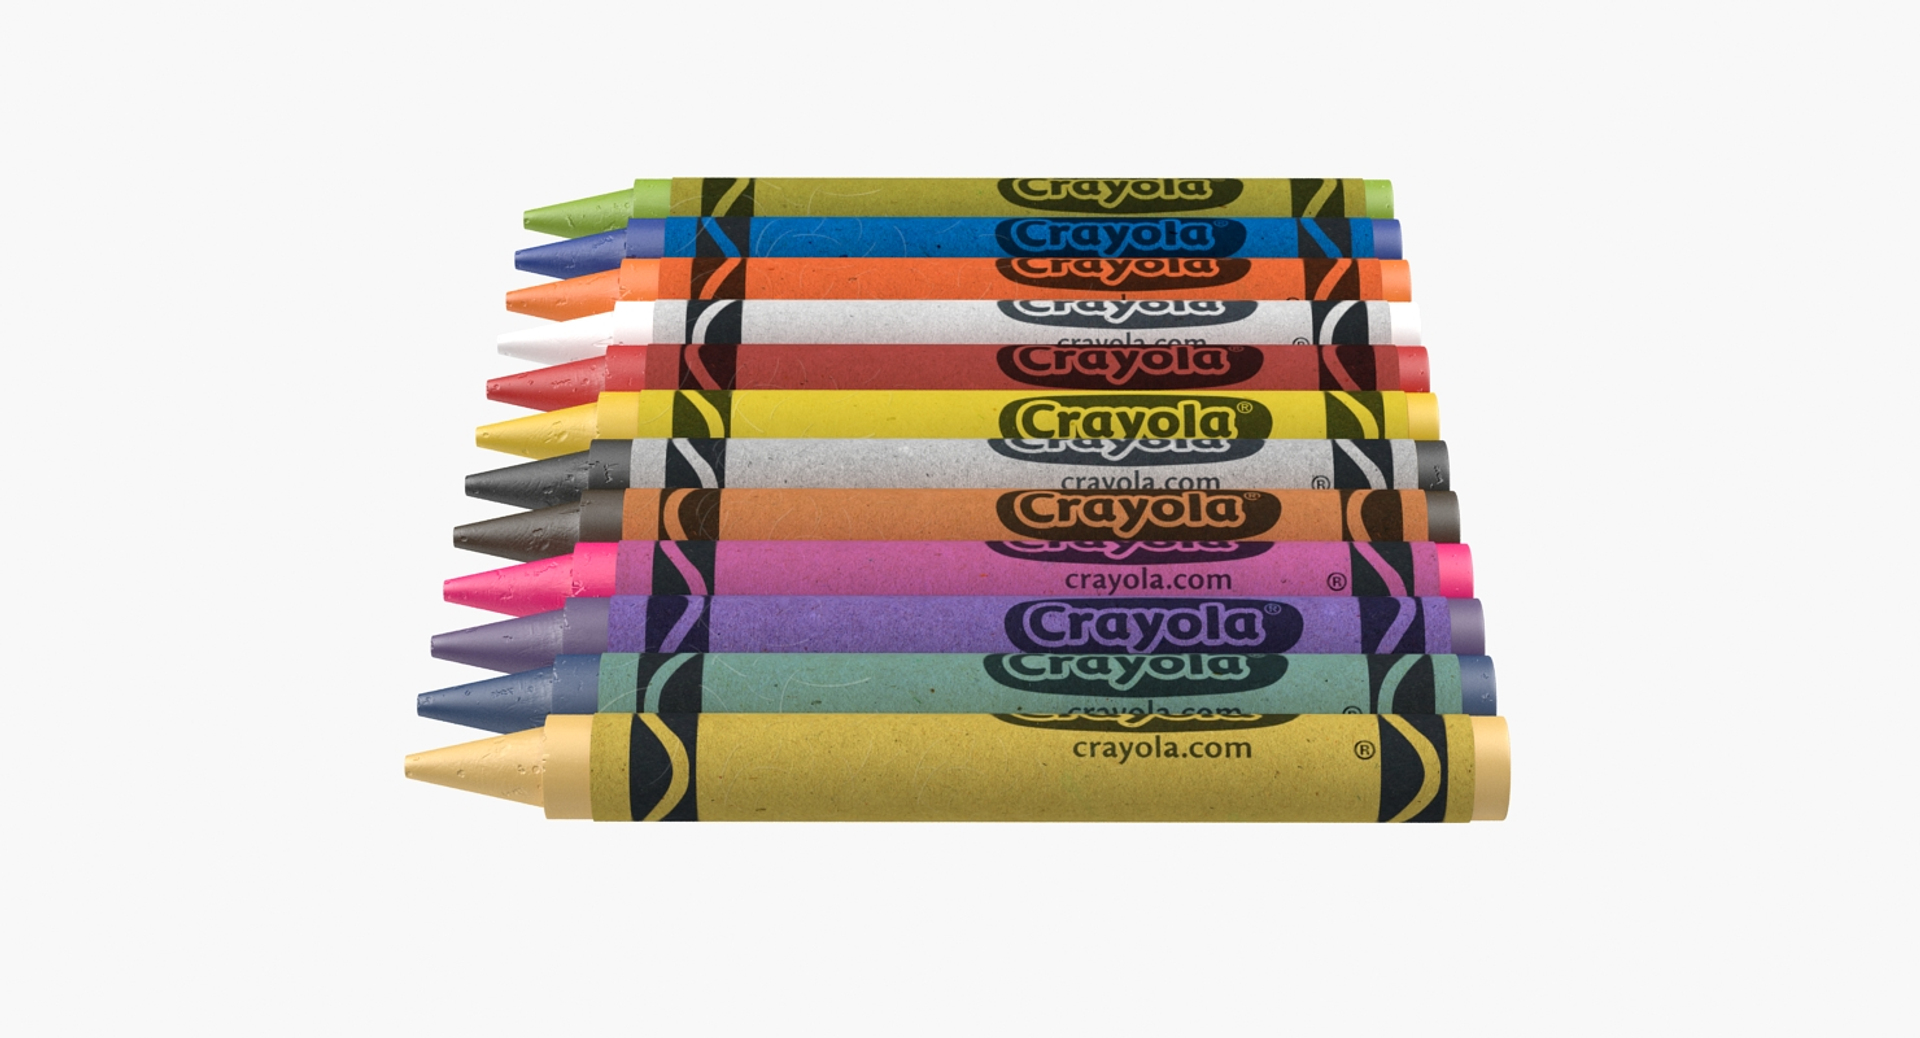 Conté Crayons and Sets